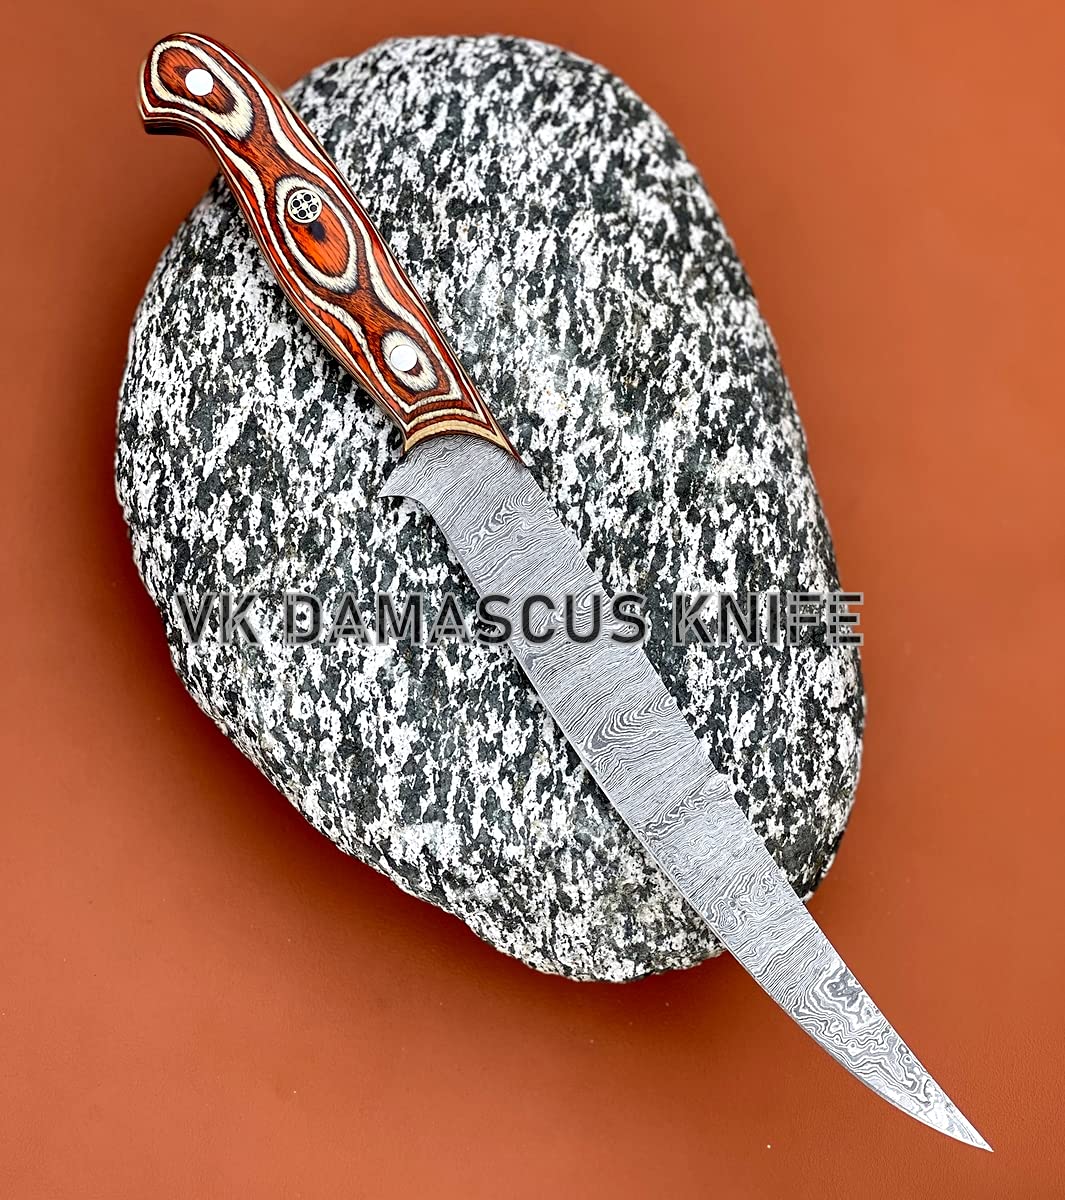 Damascus Boning Knife Fillet Knife 13" Handmade Thin Sharp Progessional Chef Kitchen Knives with Leather Sheath Wood Handle vk5524